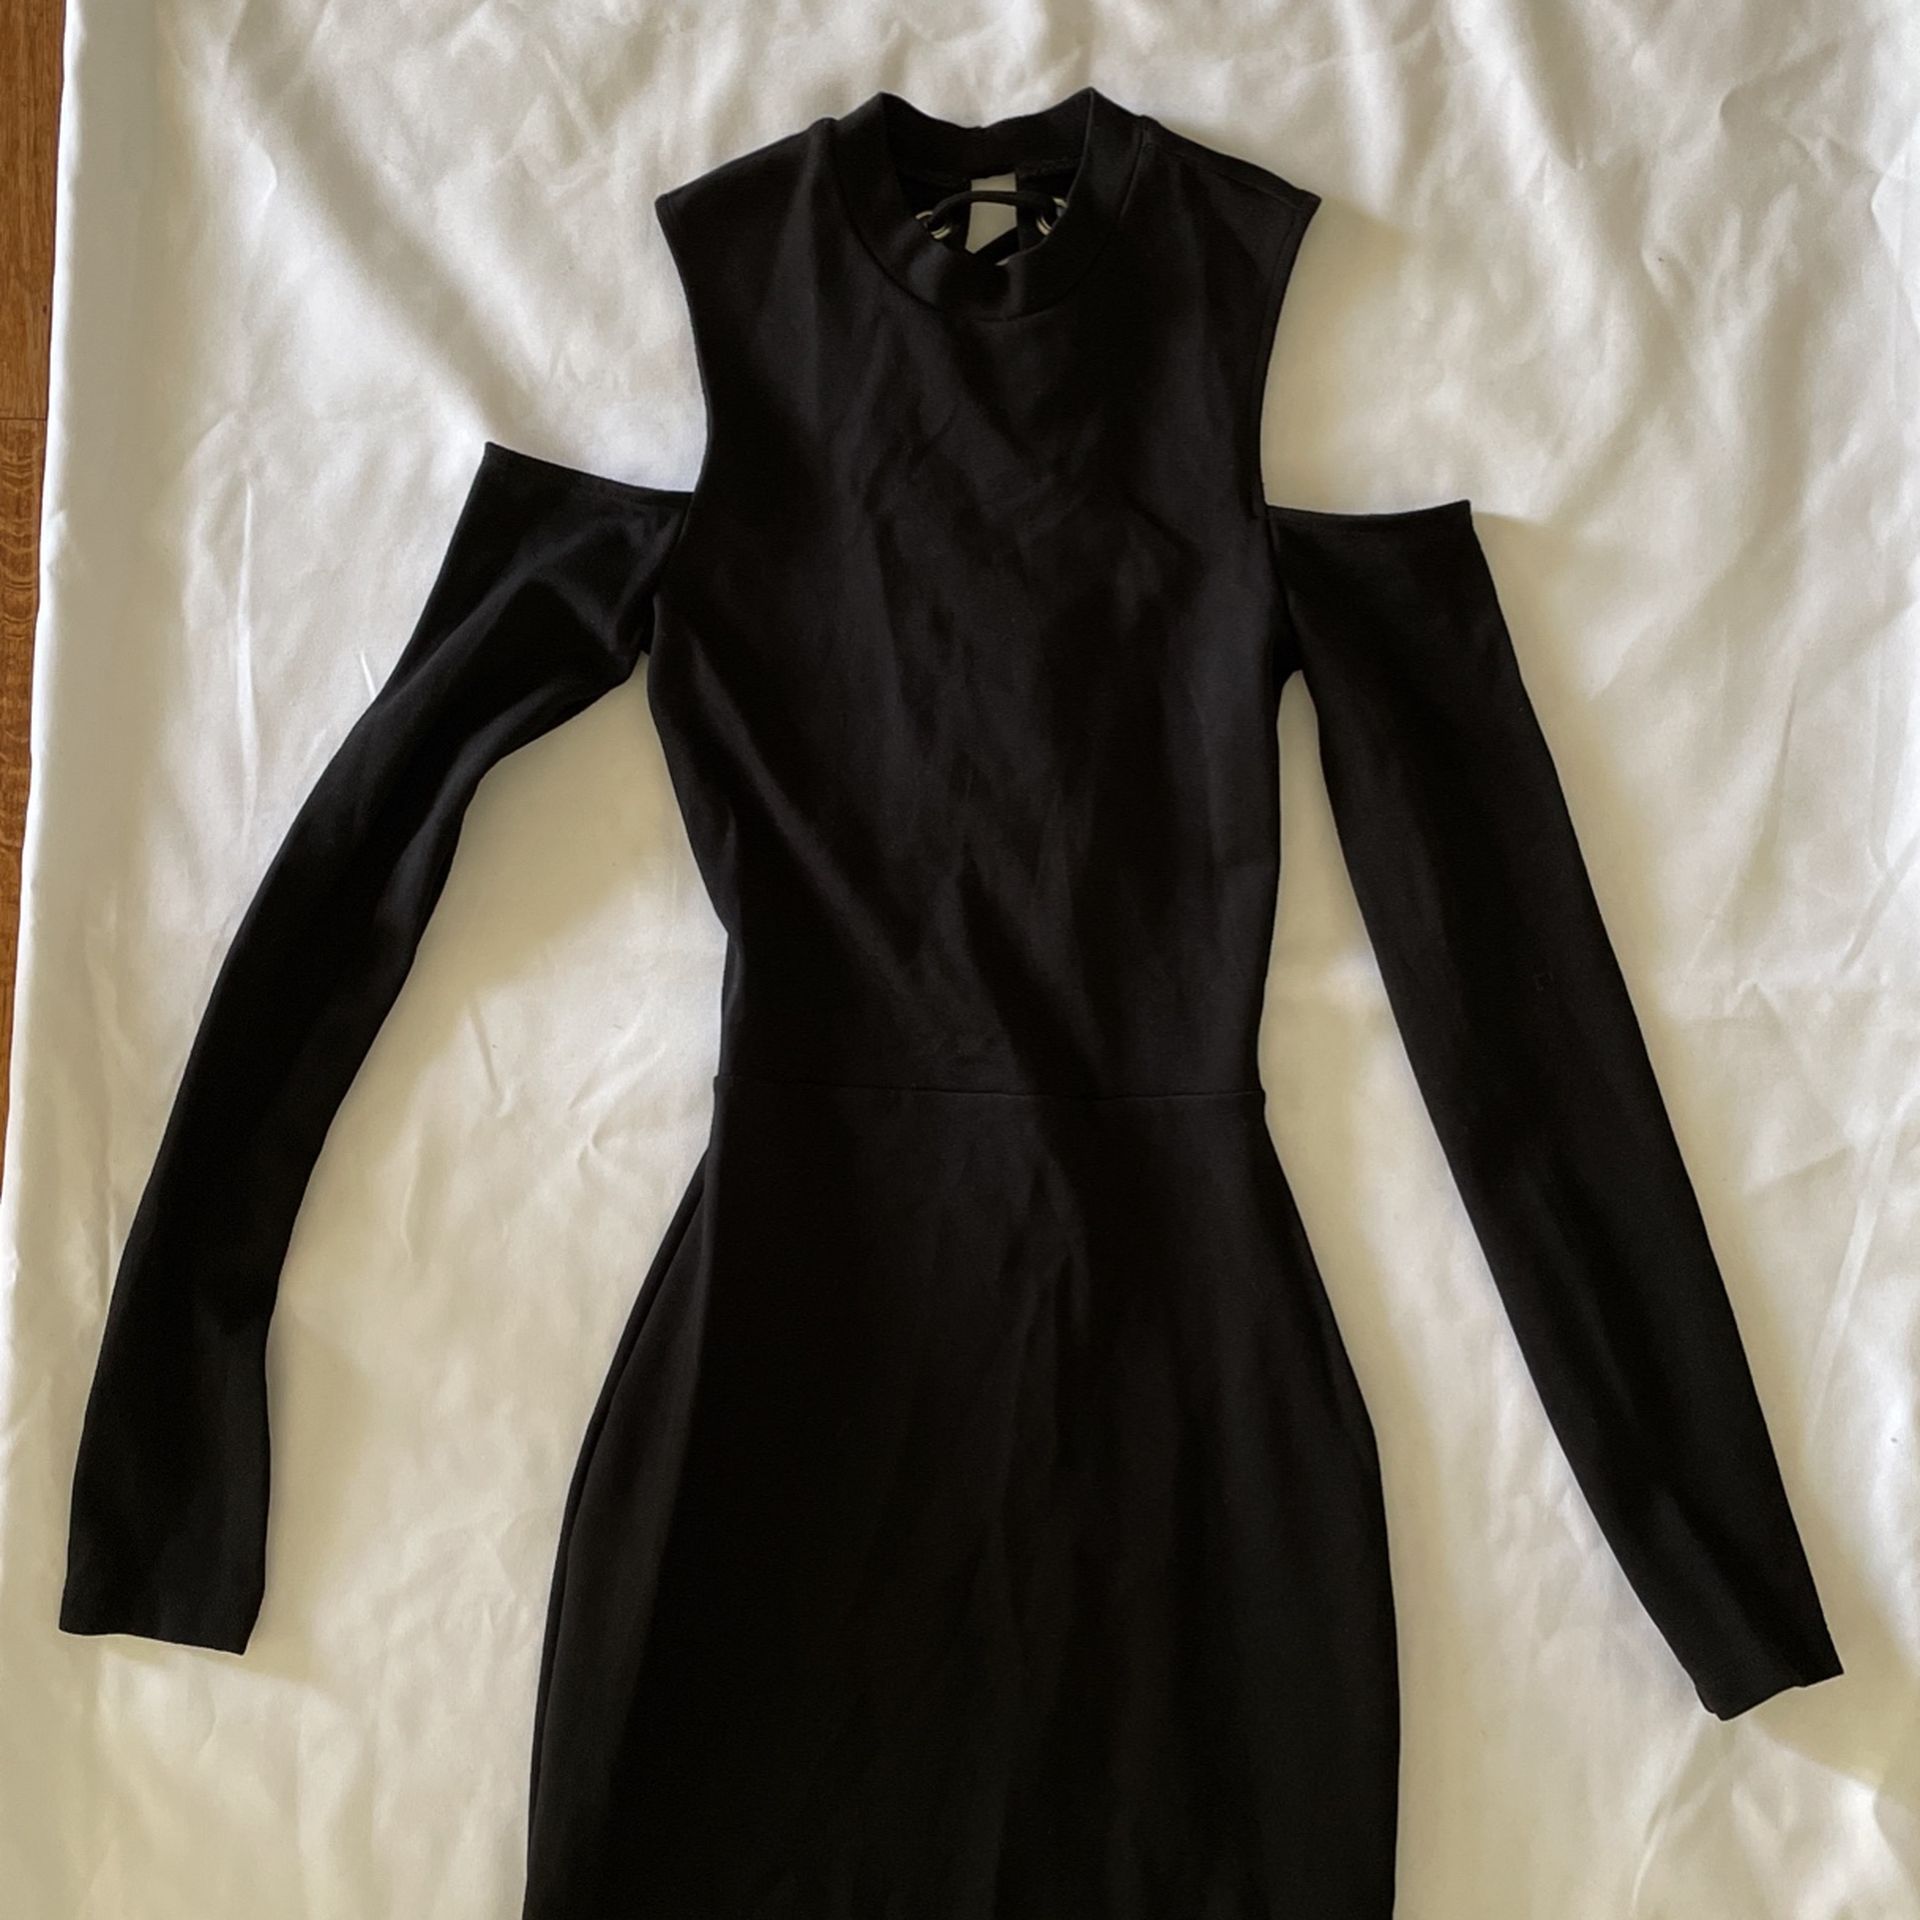 Sexy Black Dress